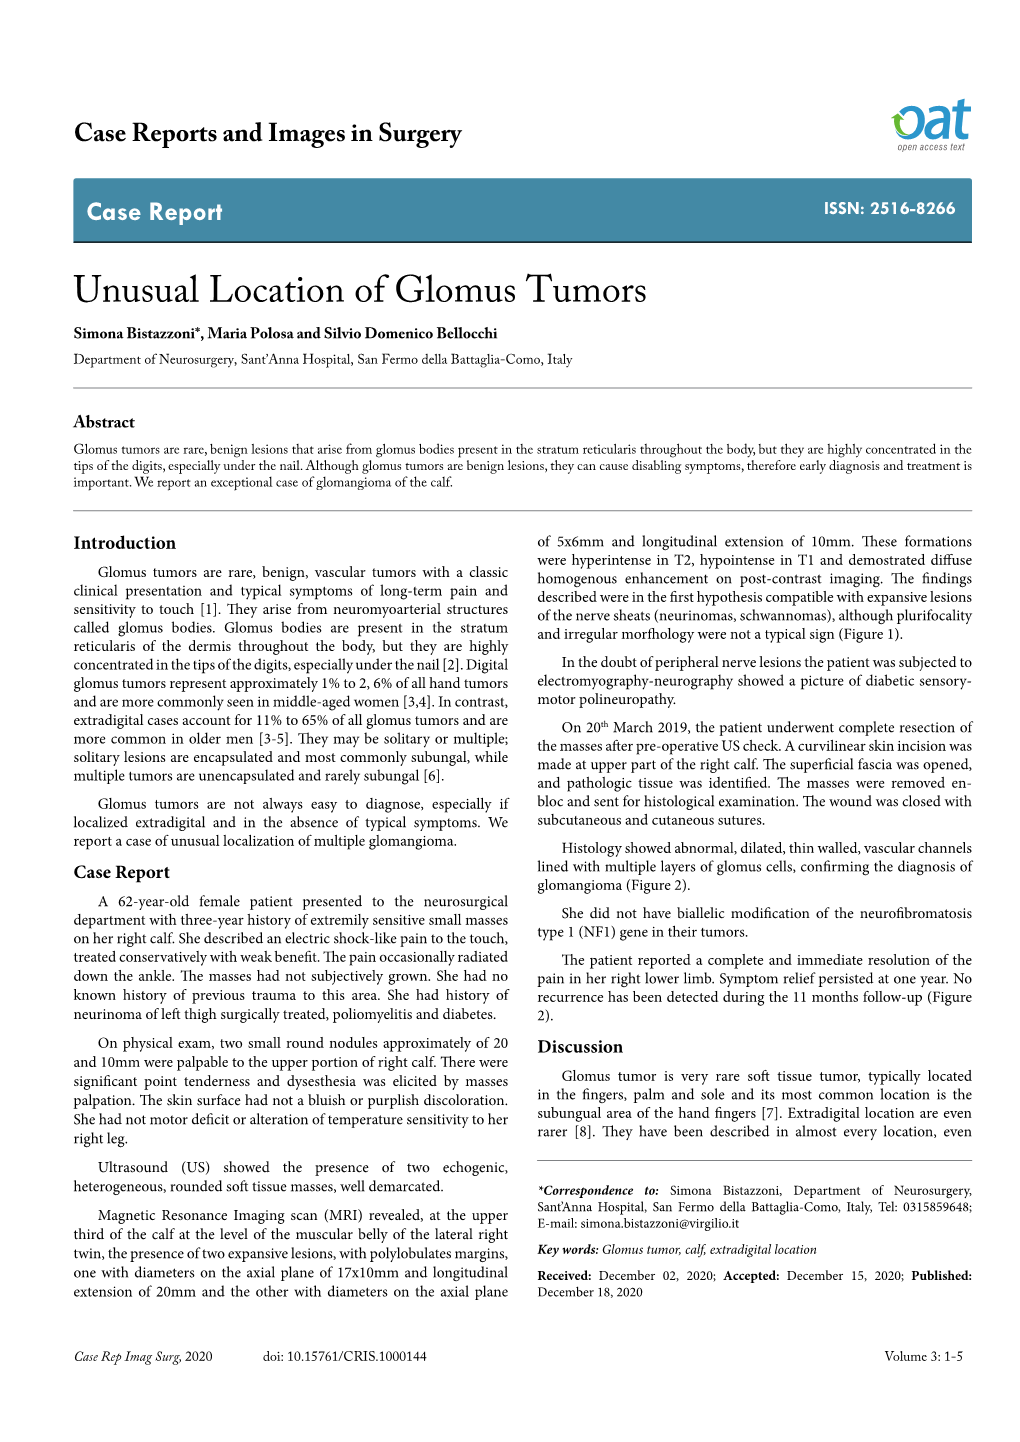 Unusual Location of Glomus Tumors